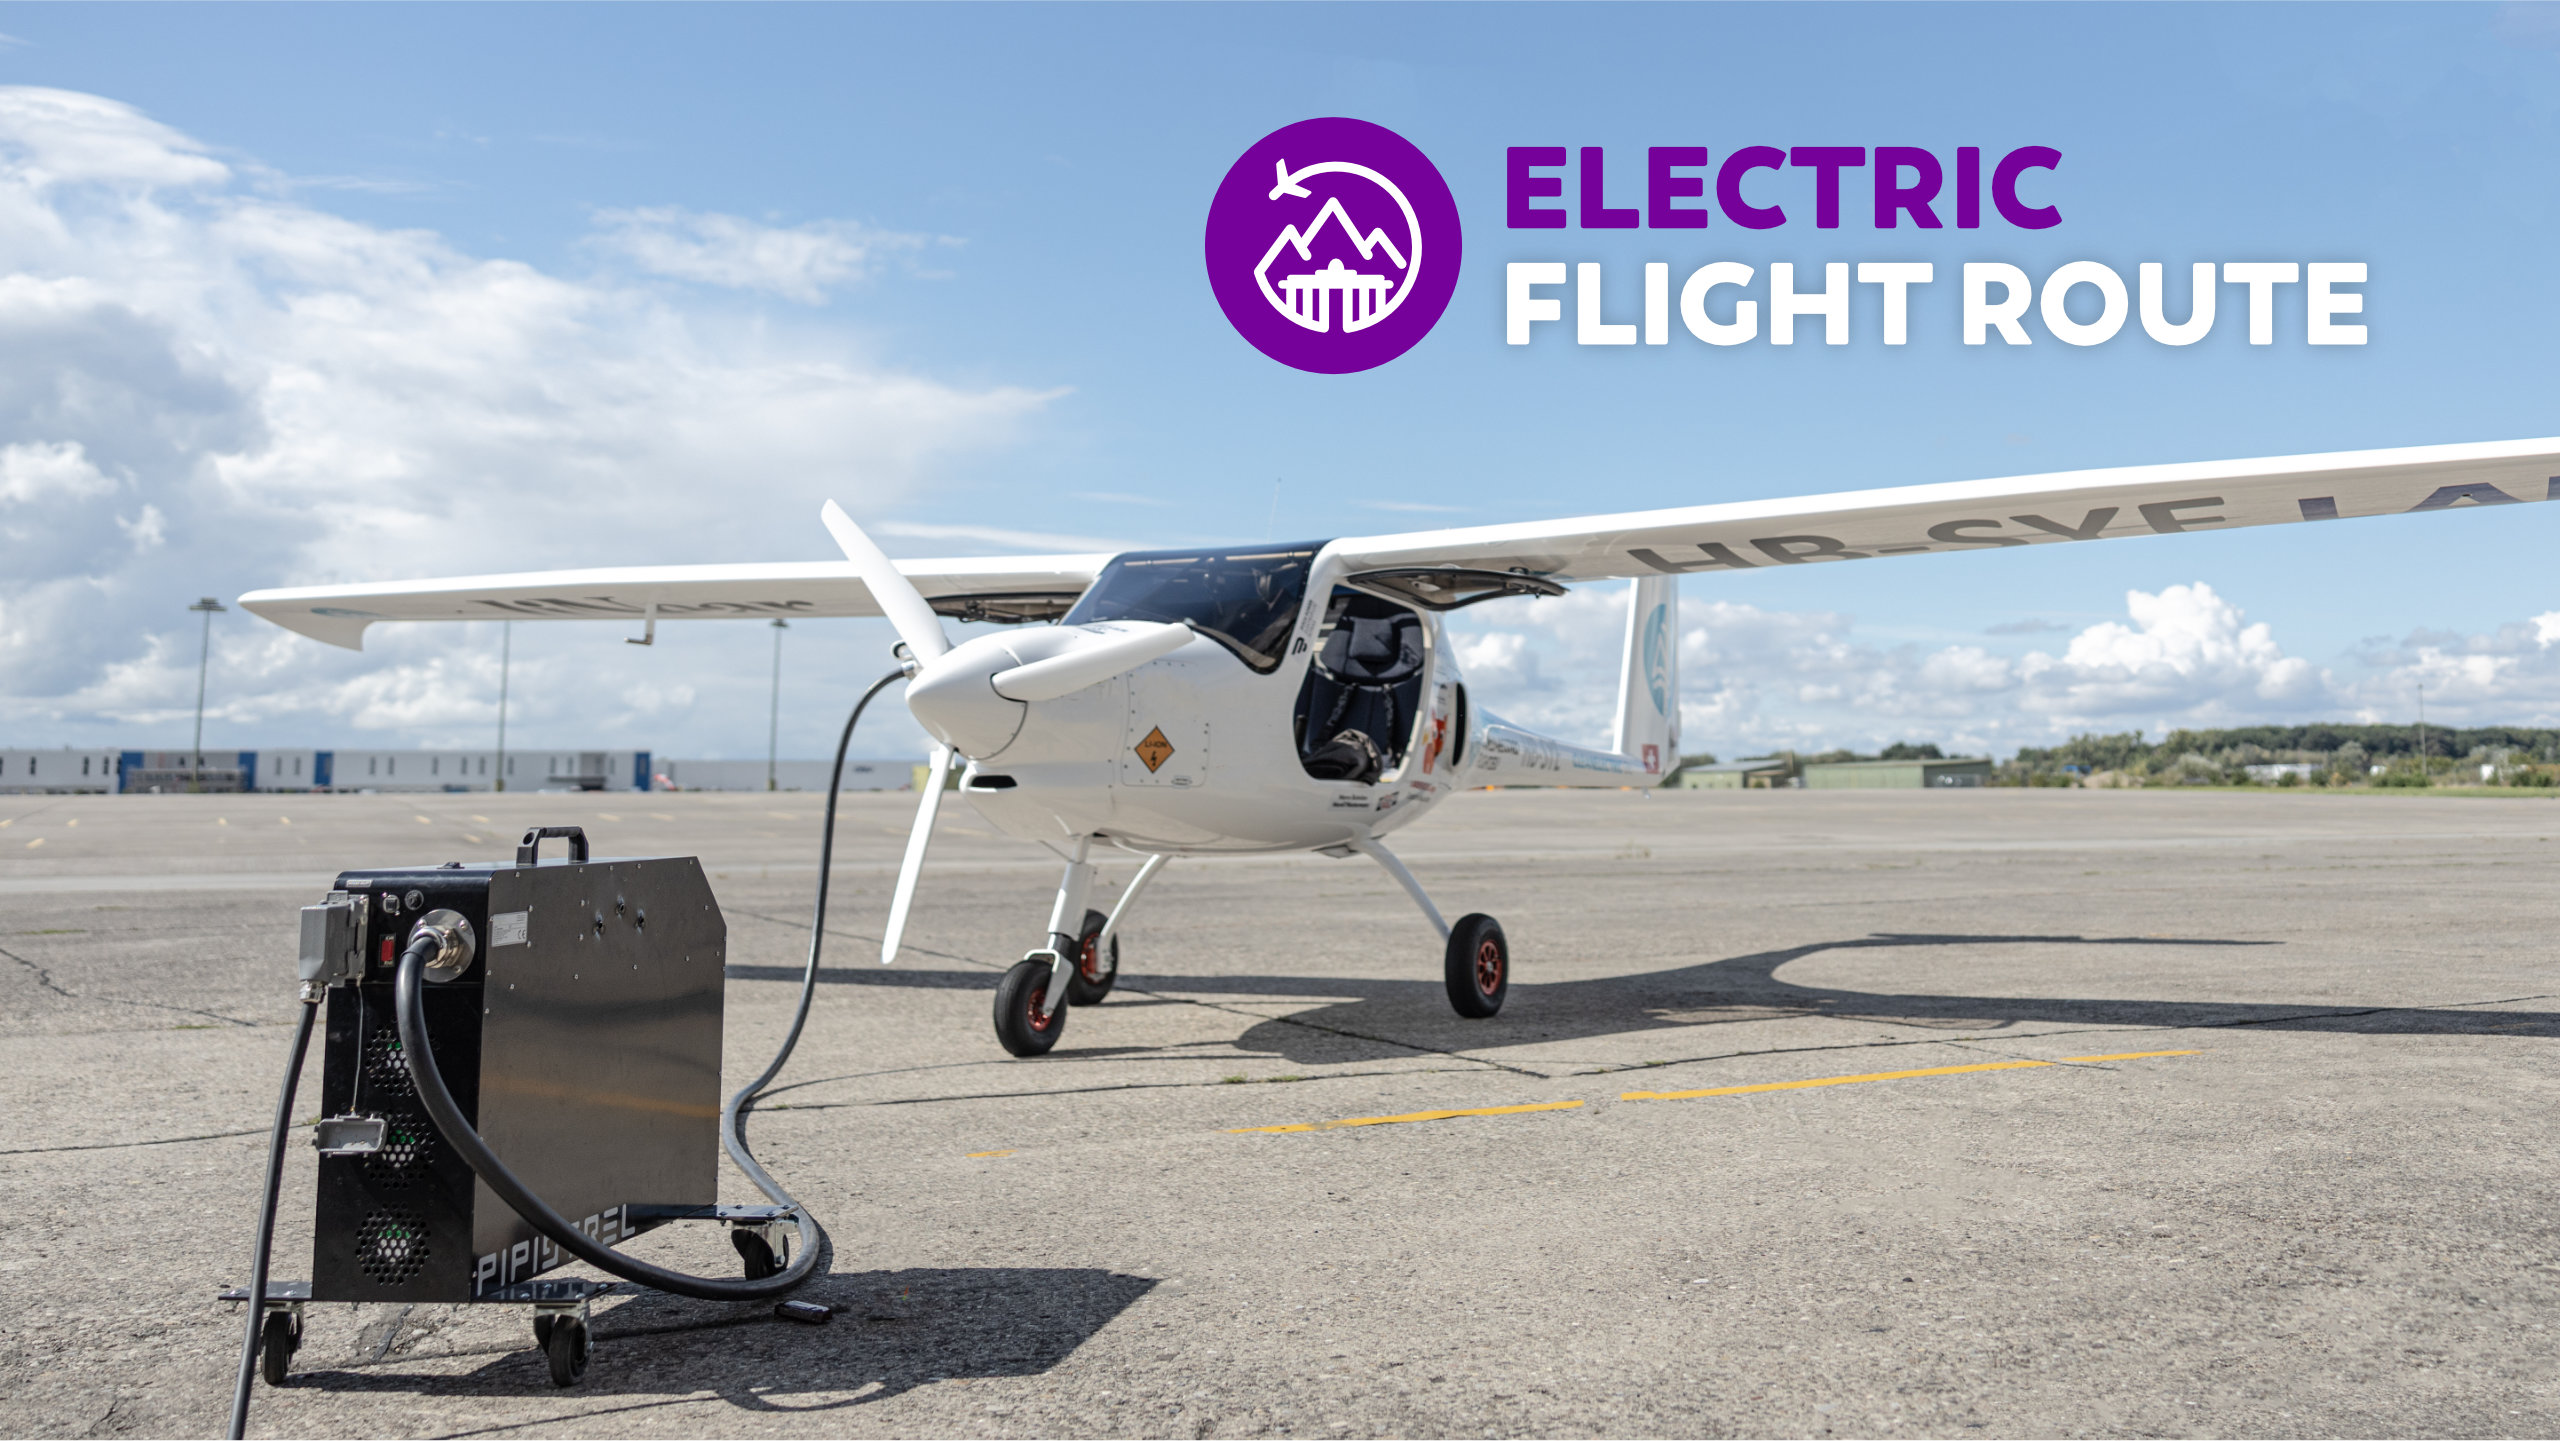 (c) Electric-flight-route.eu